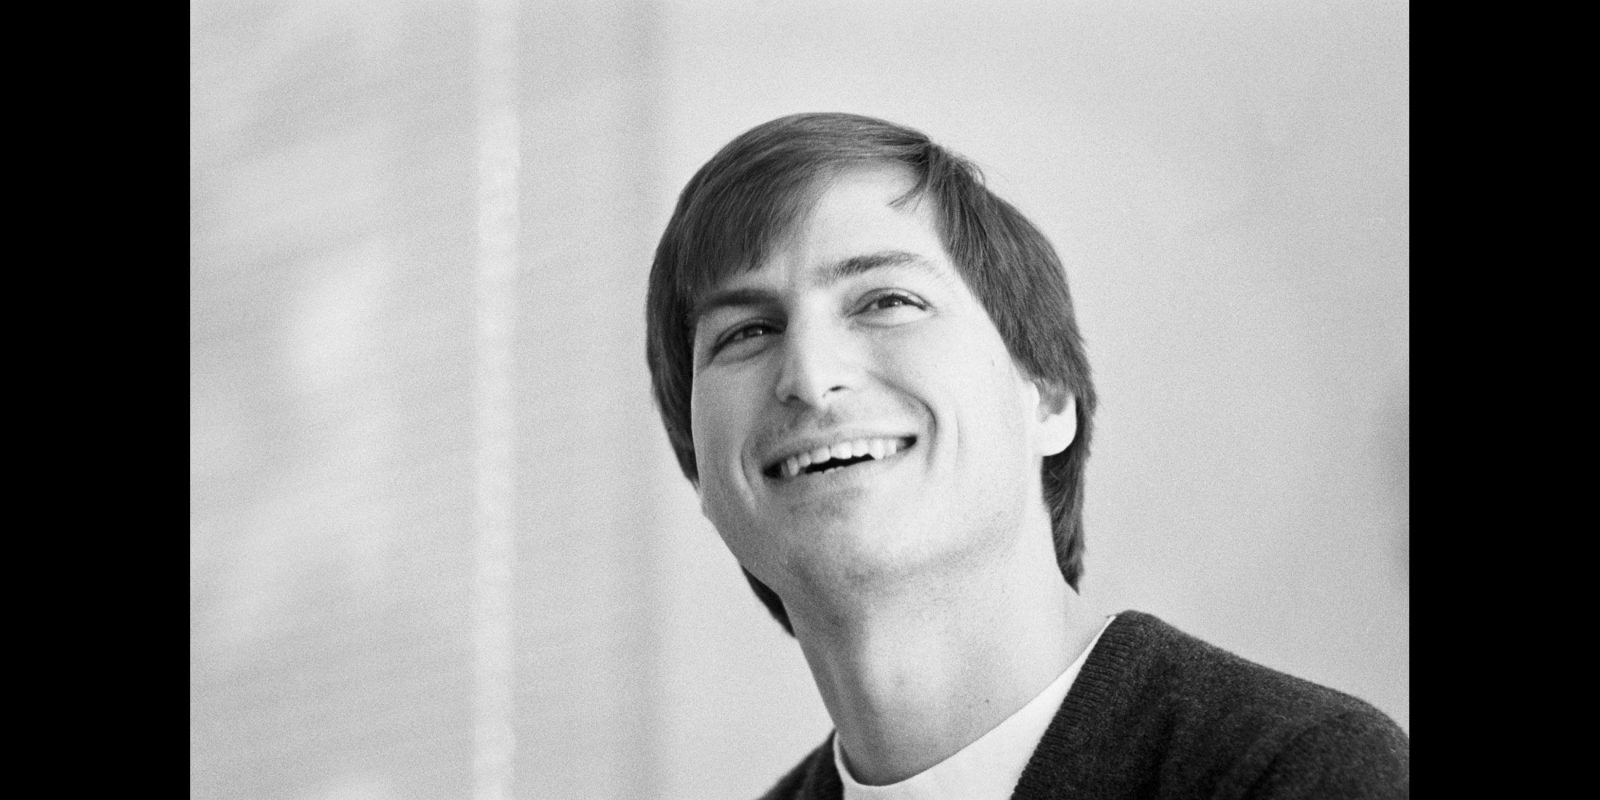 Tim Cook remembers Steve Jobs